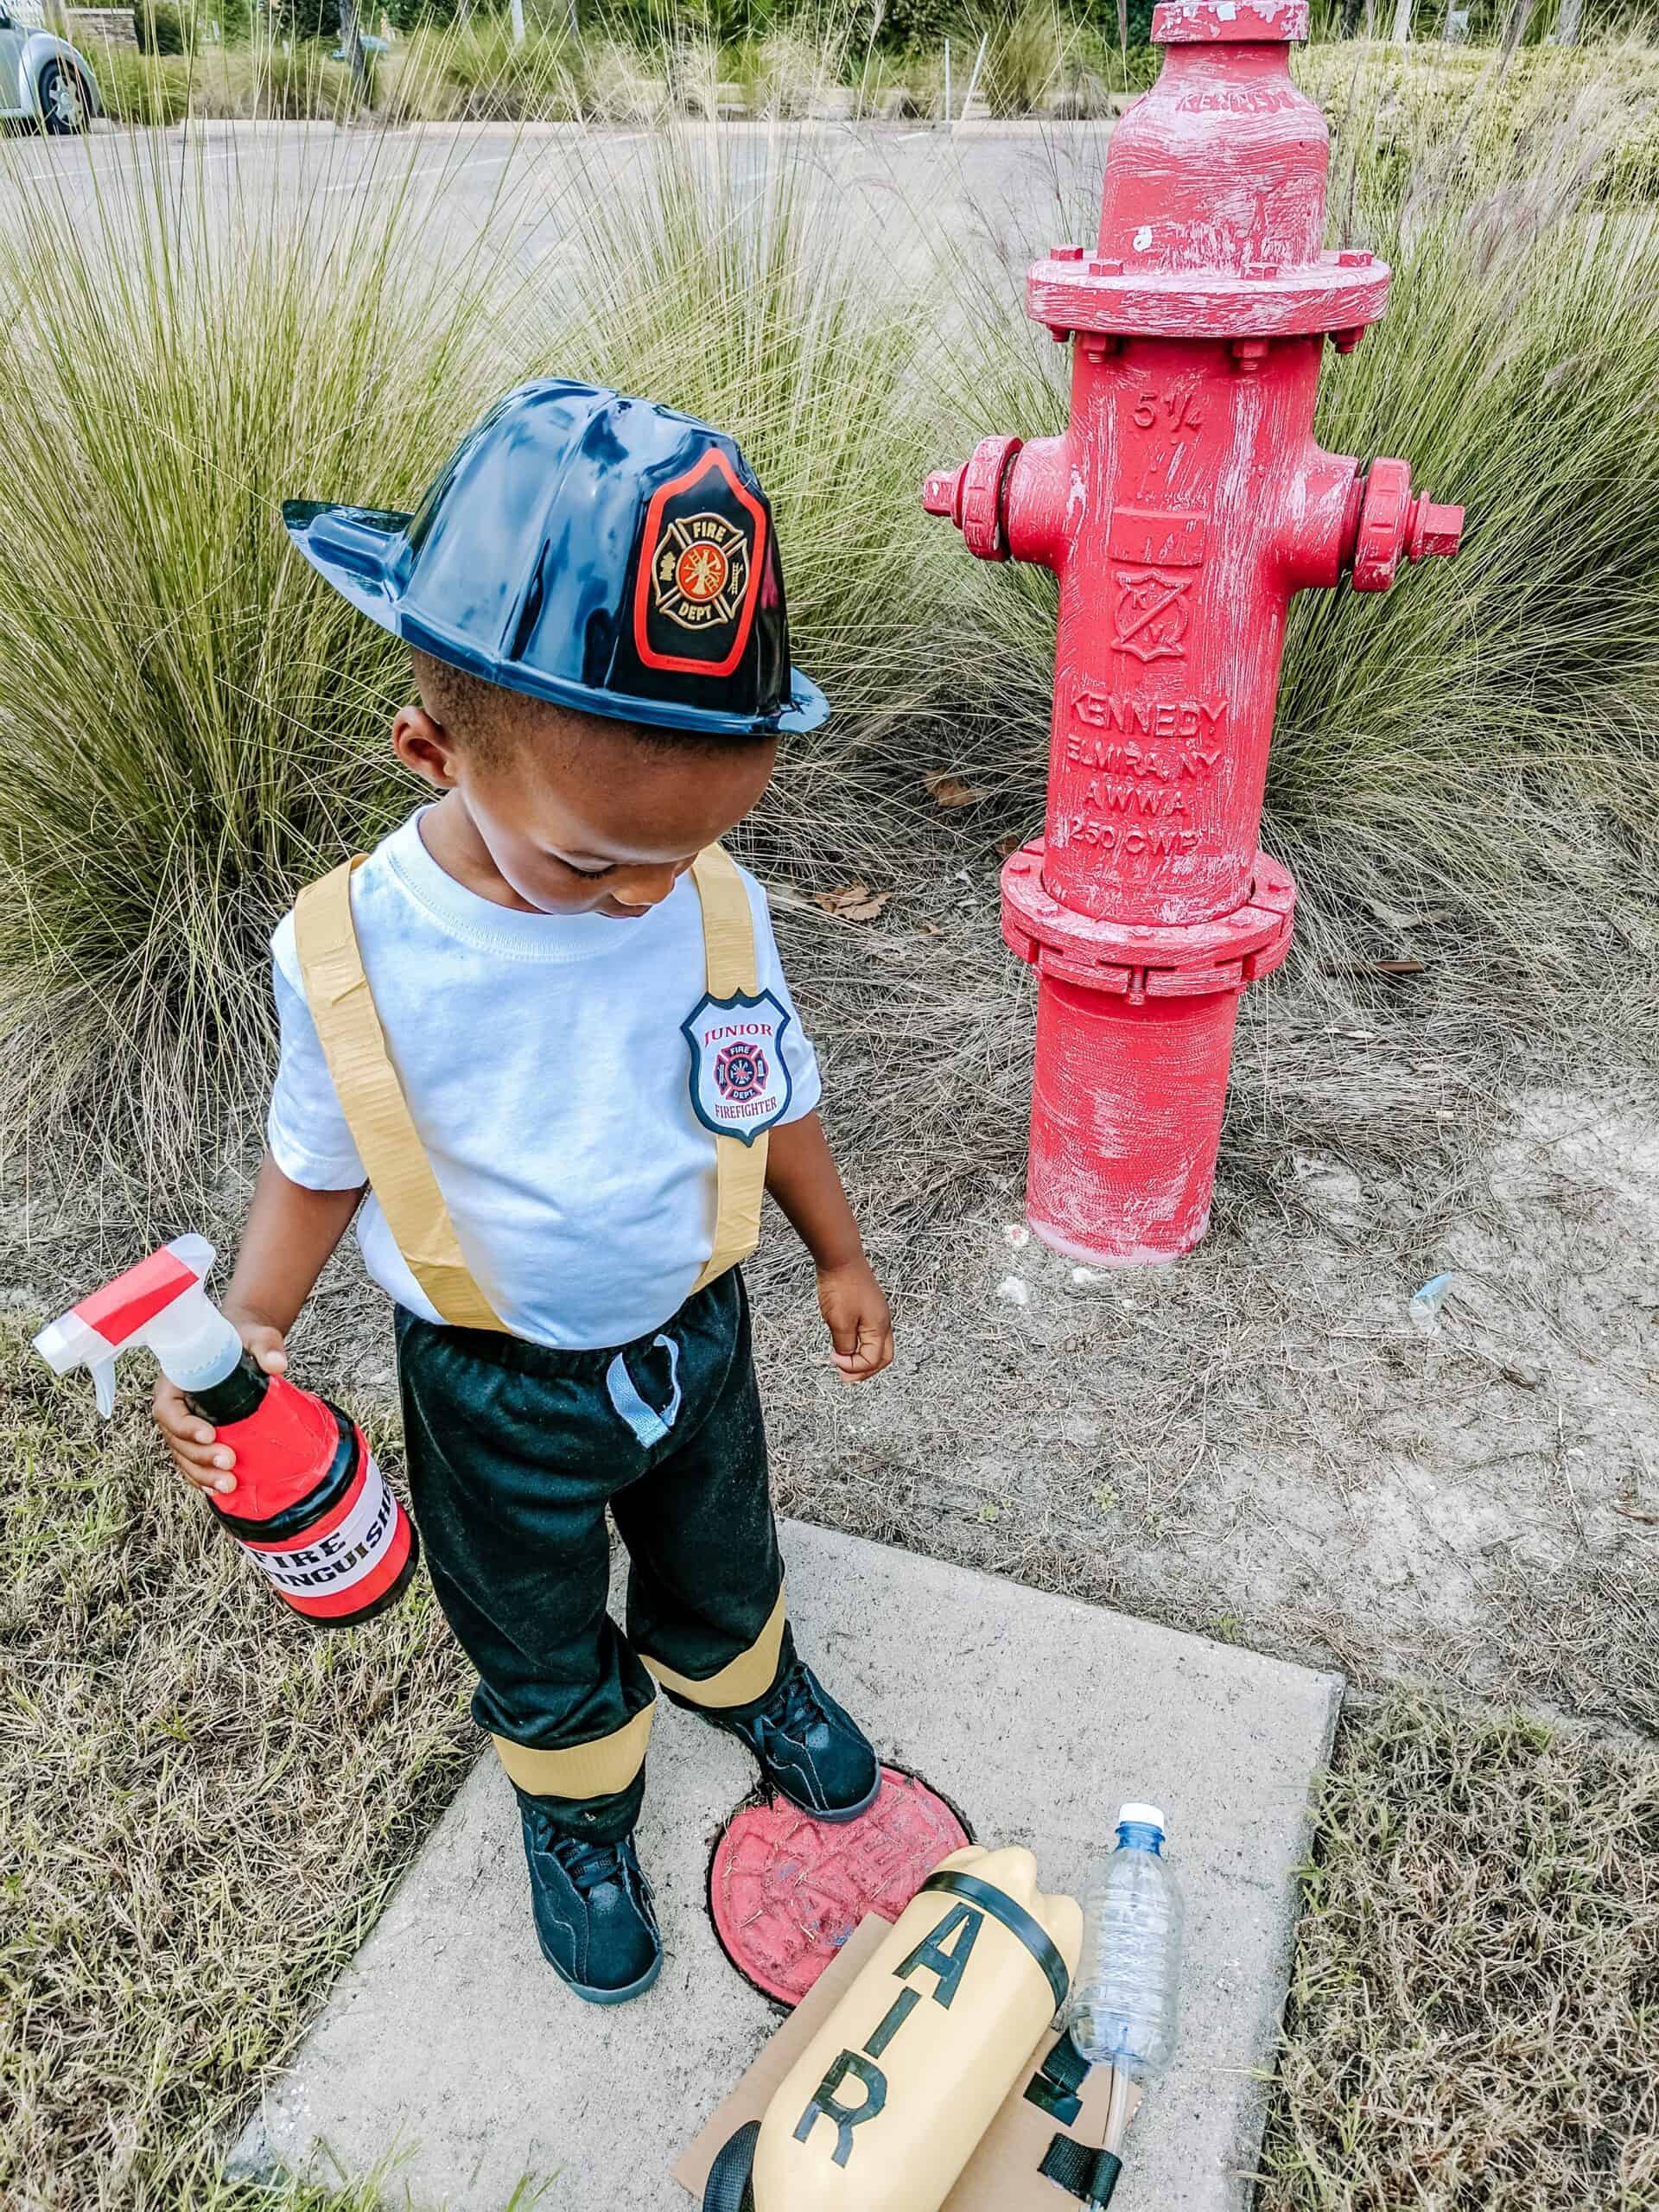 DIY Firefighter Costume by Karimah Henry